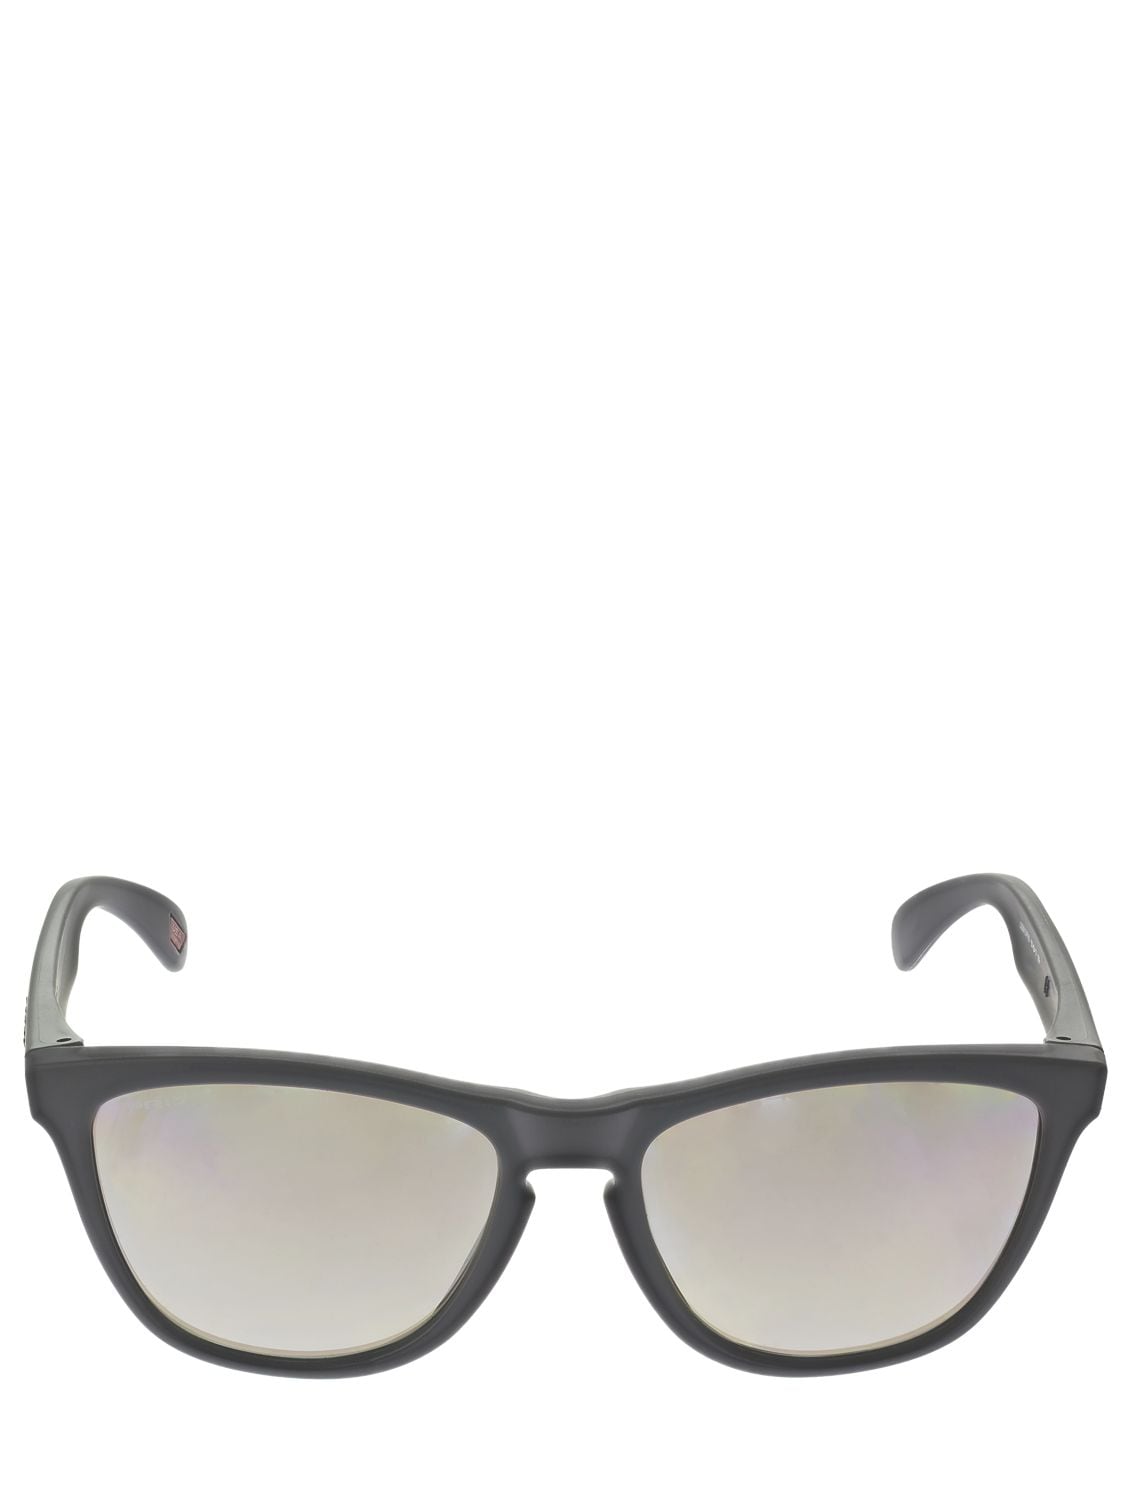 Image of Frogskins Prizm Polarized Sunglasses